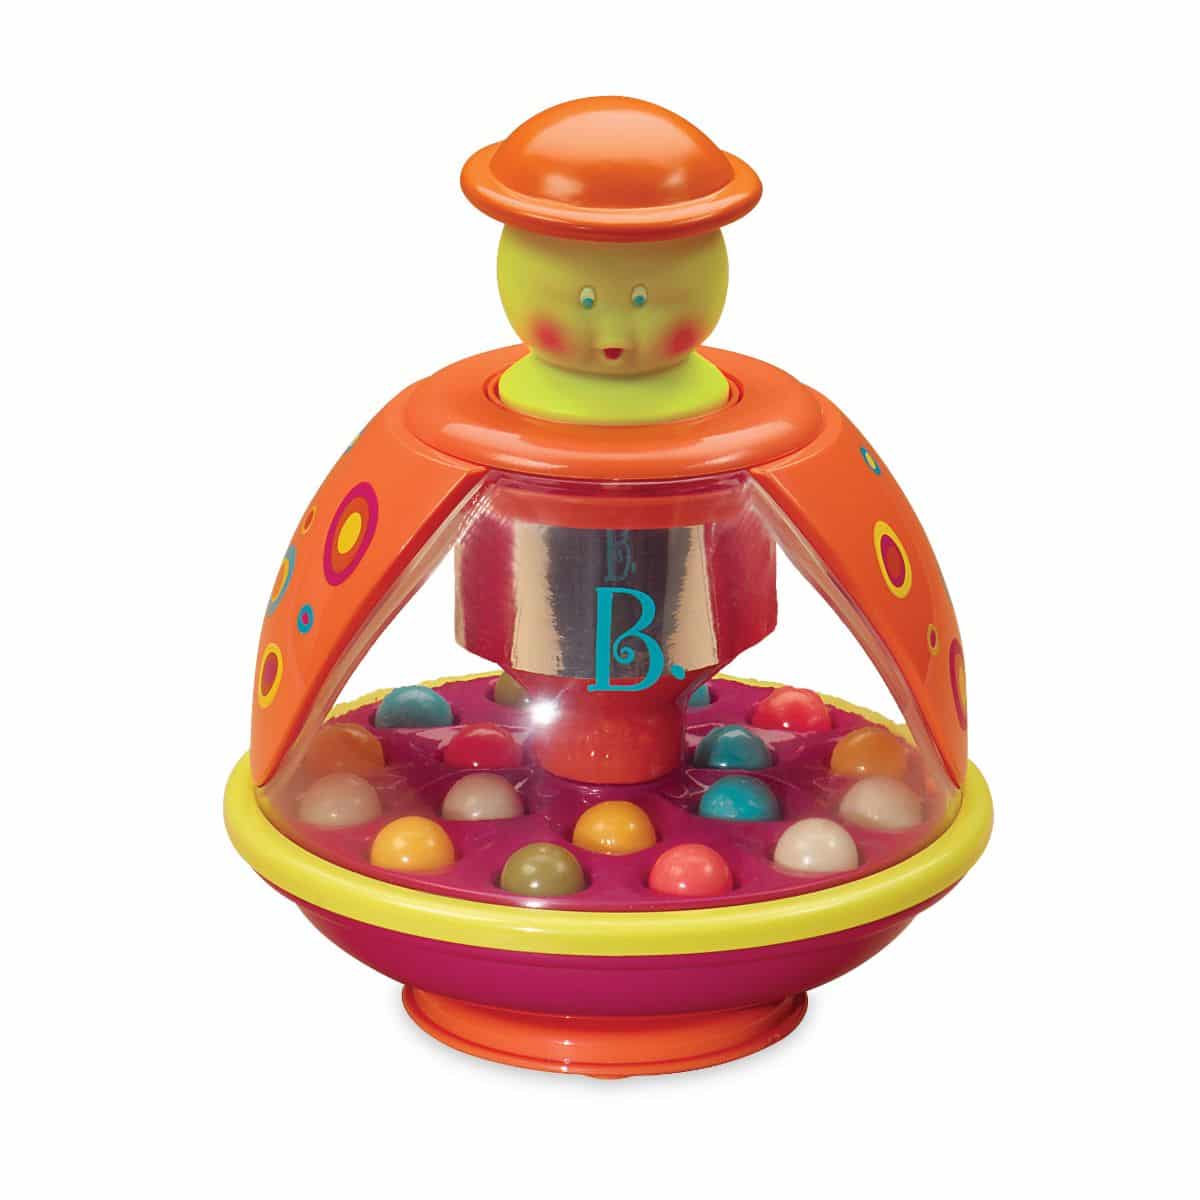 Ladybug tumble toy with colorful balls